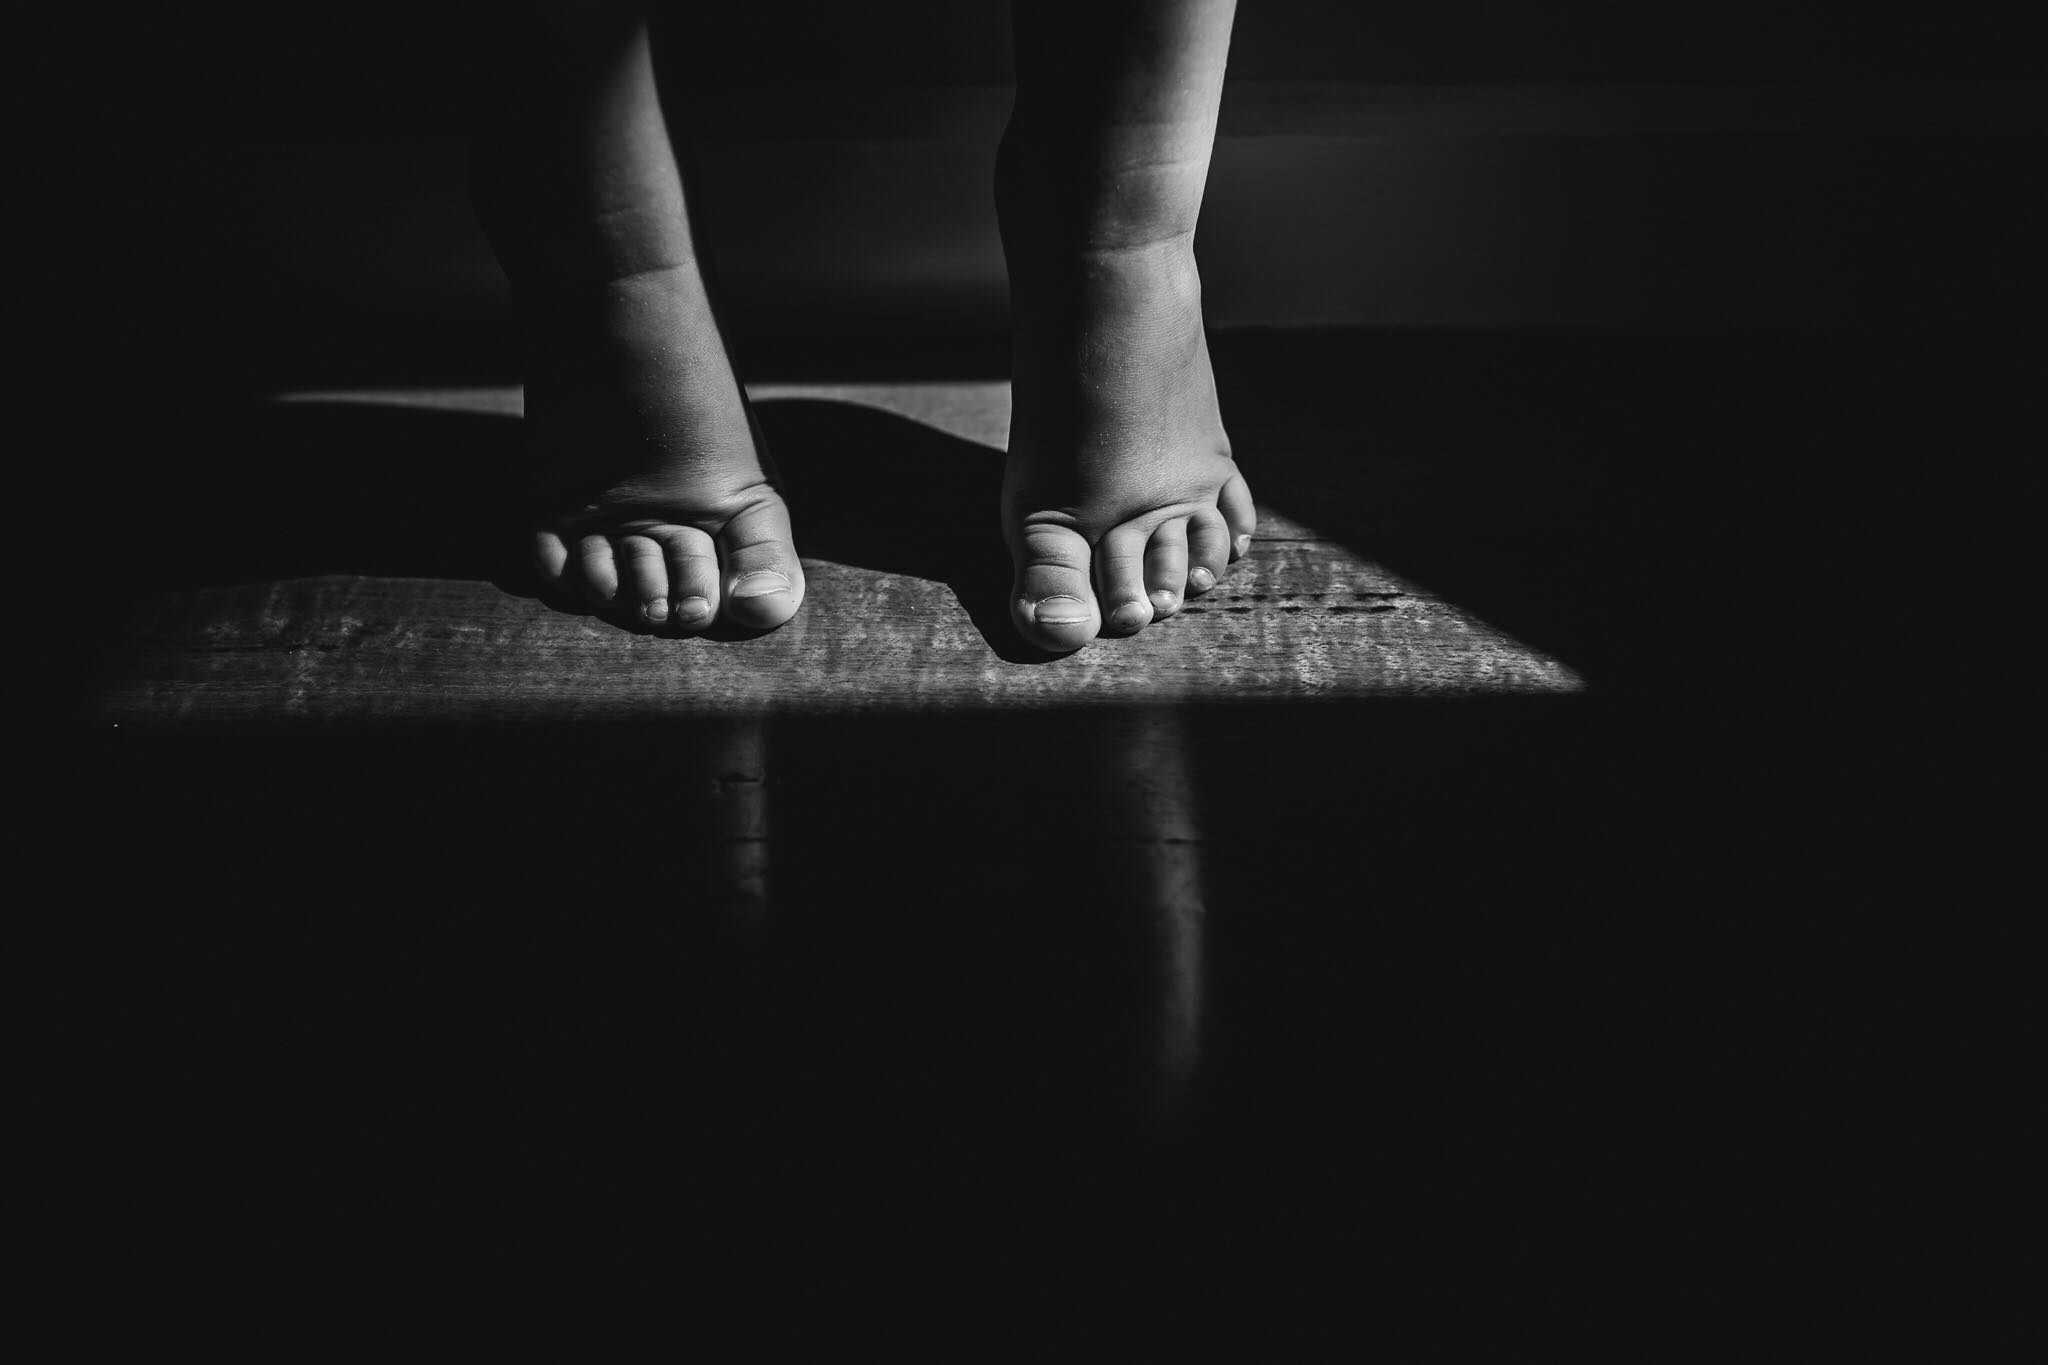 monochrome shadow image of little feet